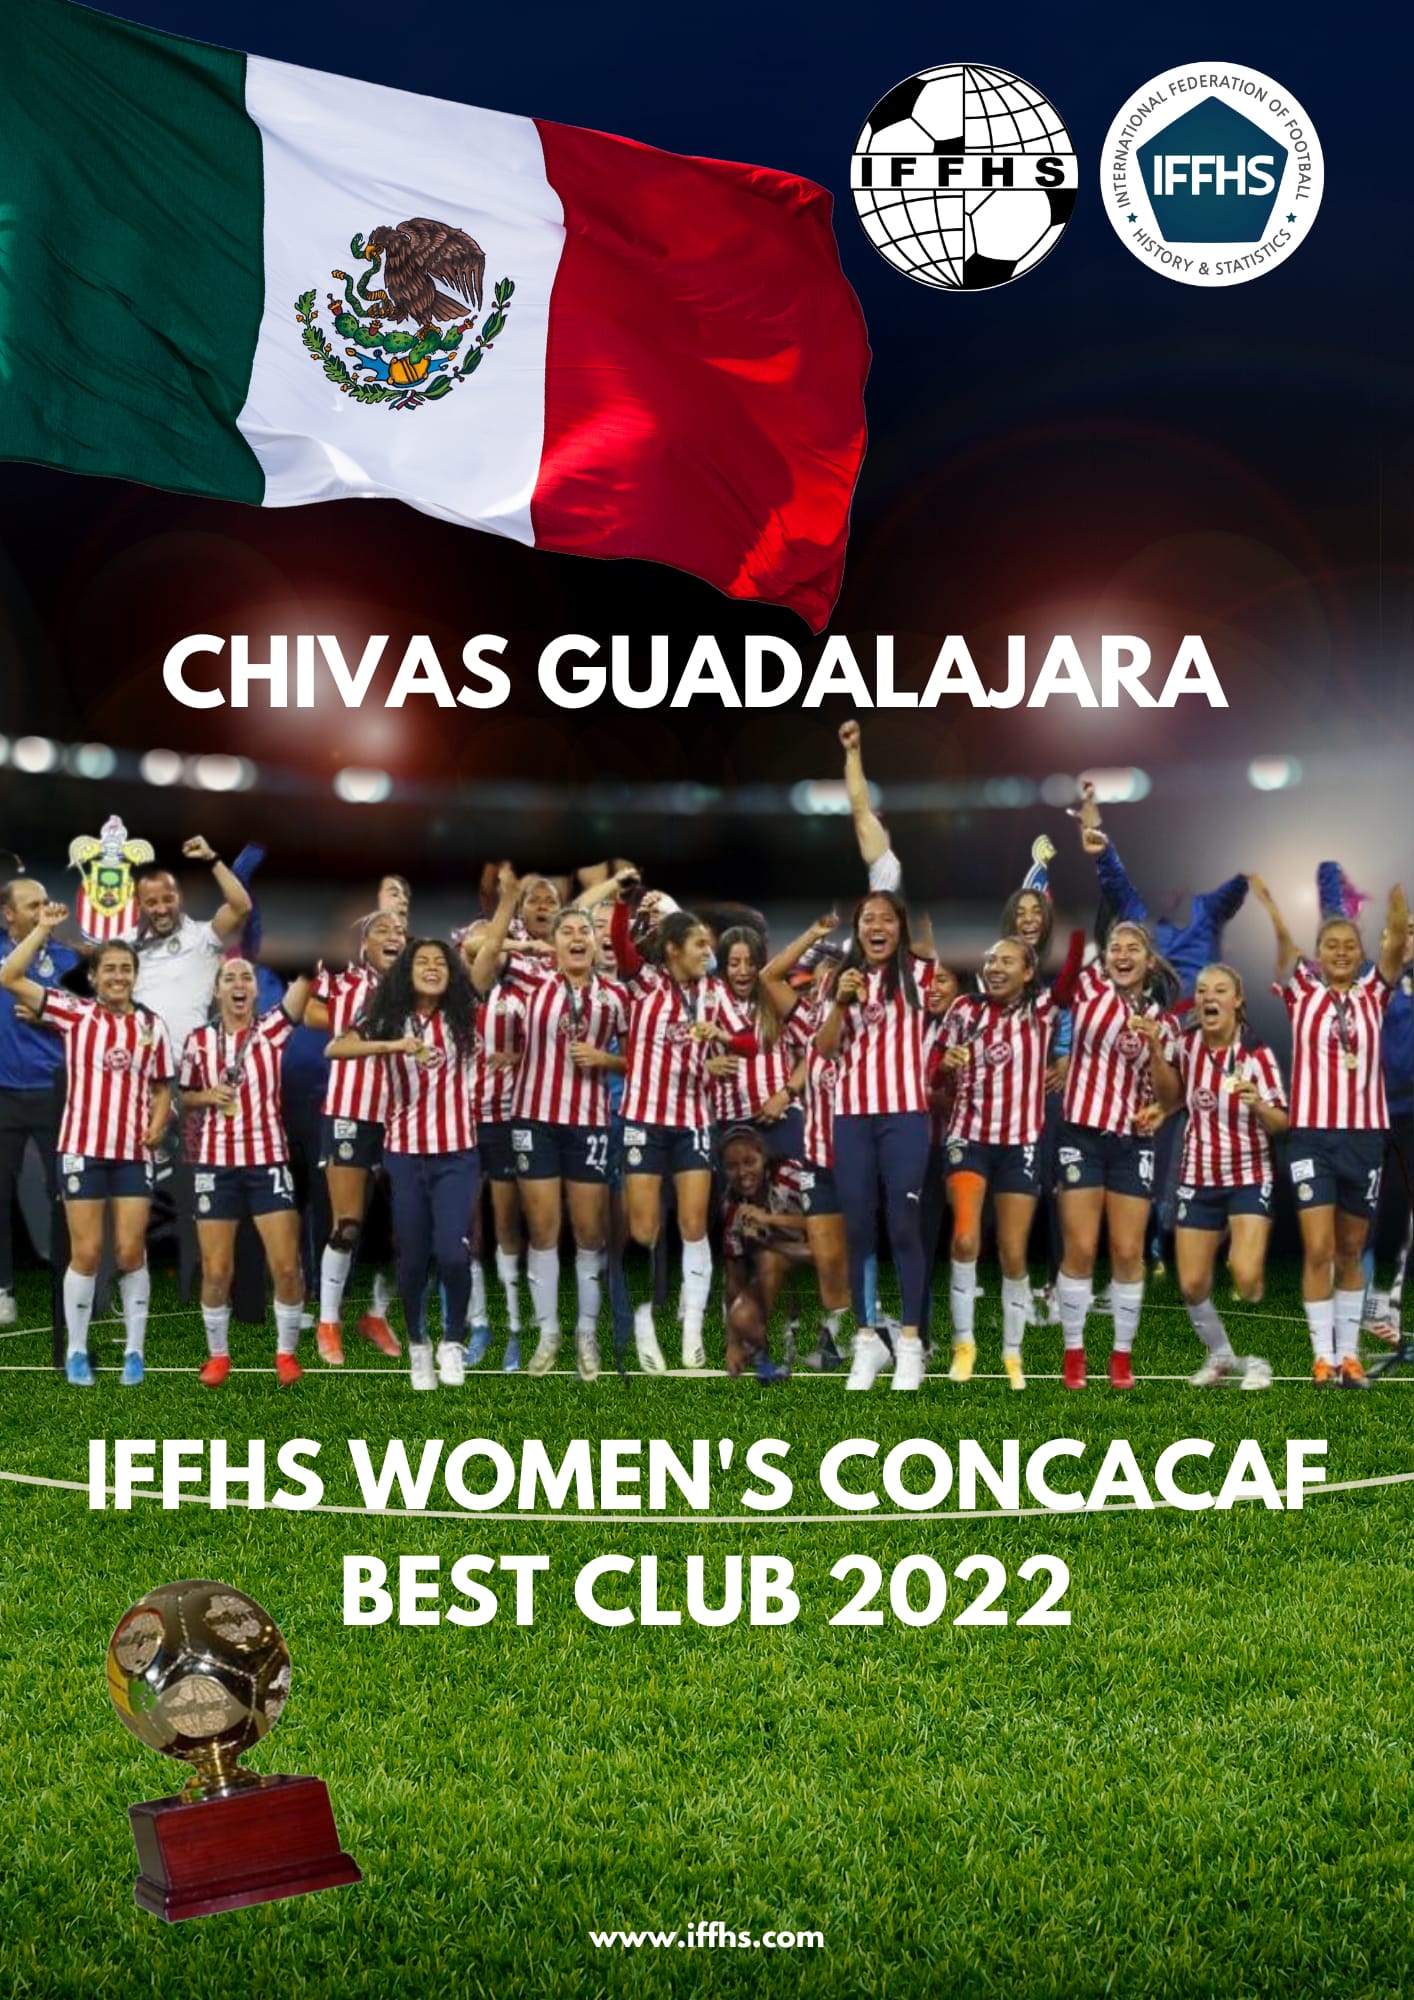 iffhs women's club world ranking 2022